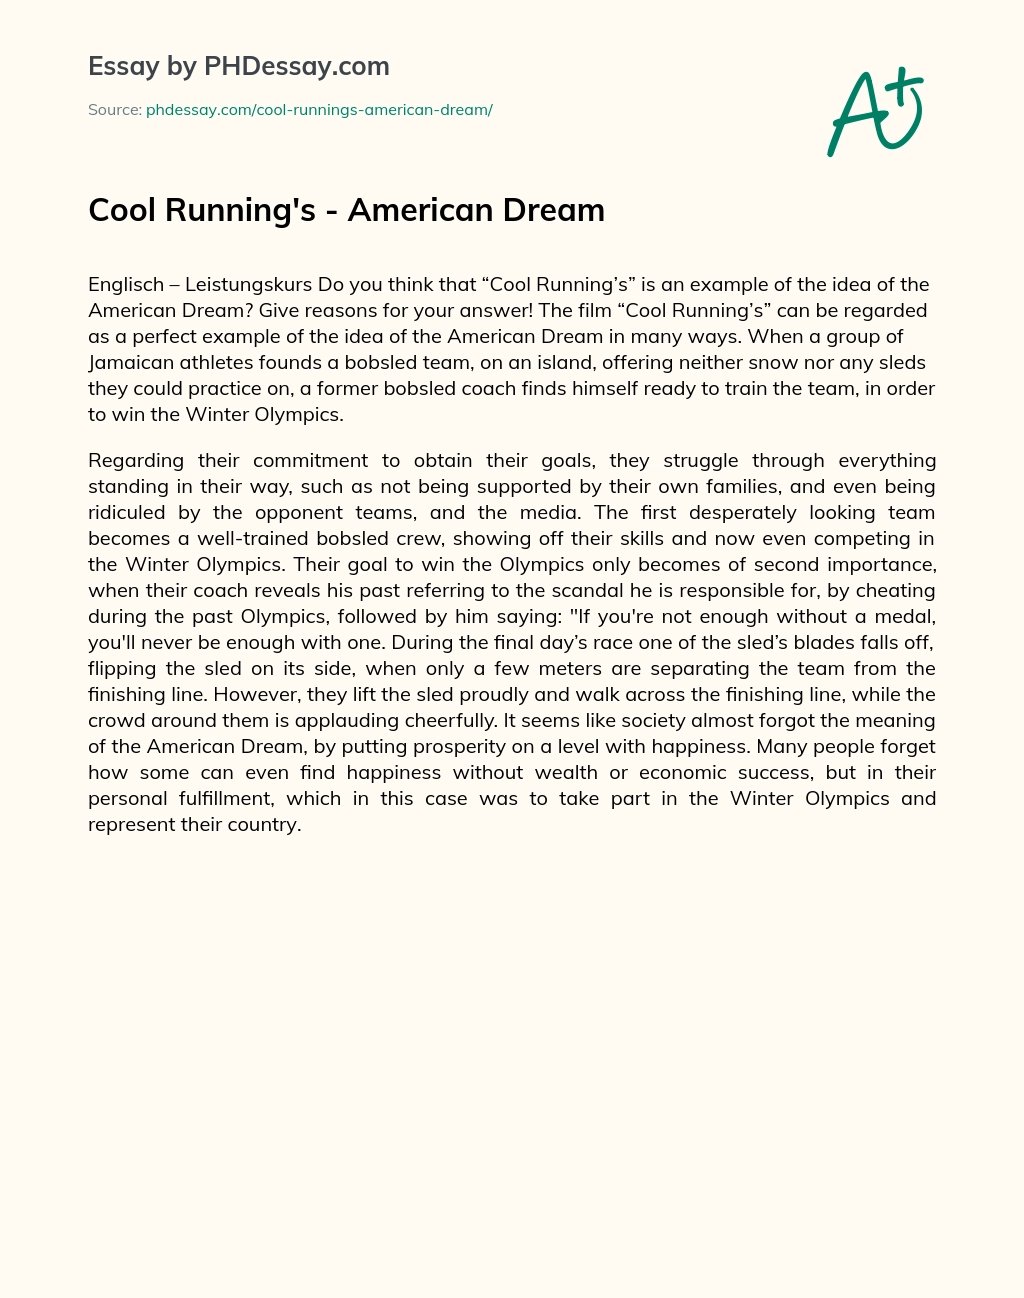 Cool Running’s – American Dream essay